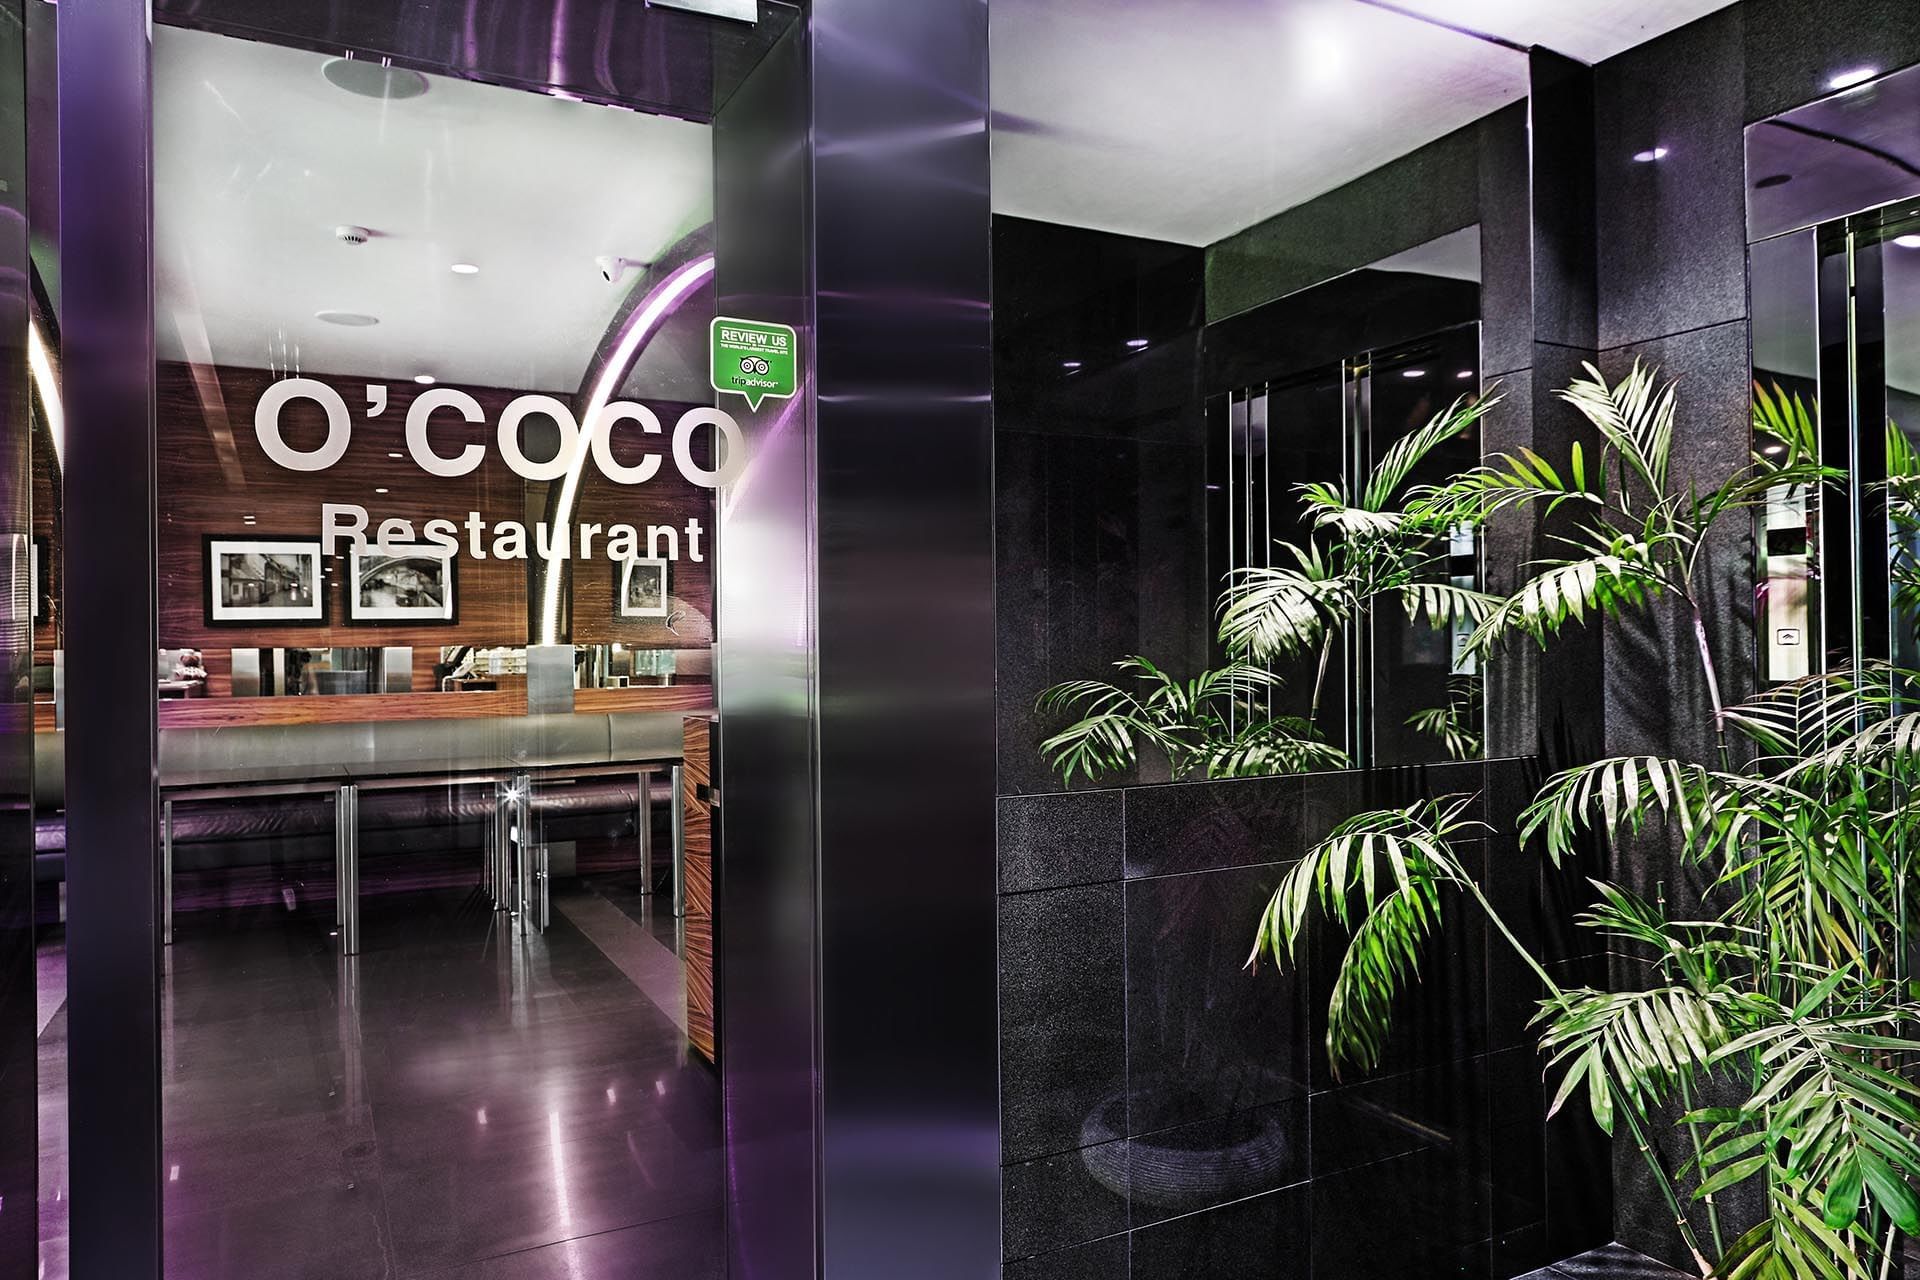 O'cocco Restaurant outside